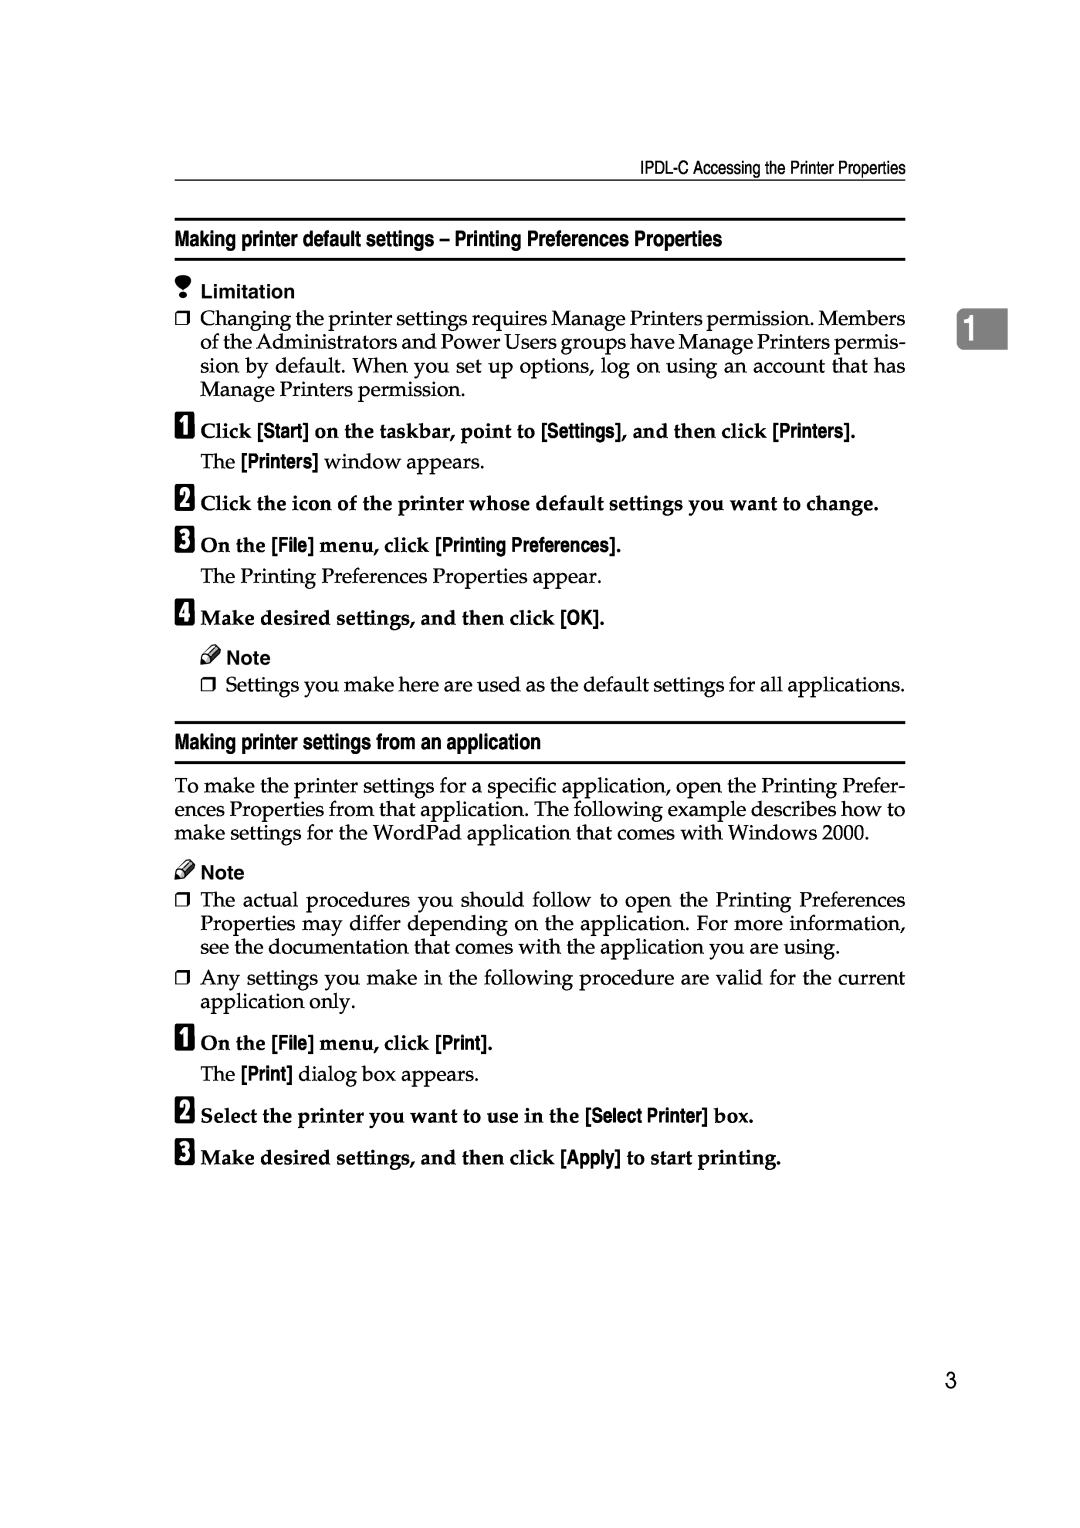 Lanier AP206 manual Making printer default settings - Printing Preferences Properties, A On the File menu, click Print 